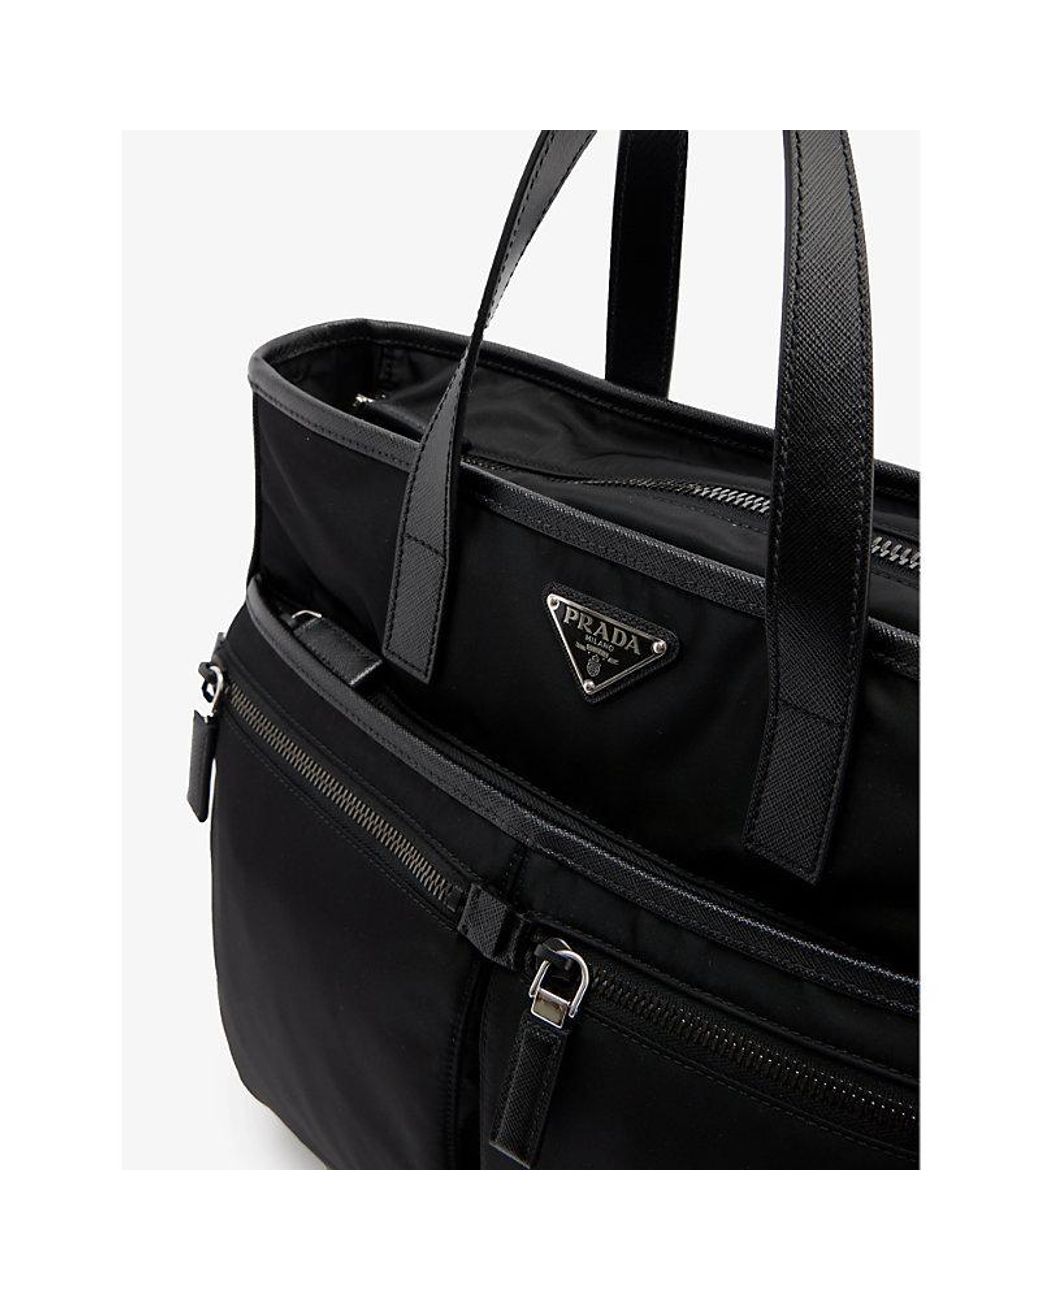 Prada Saffiano Leather Recycled Tote Bag - Black